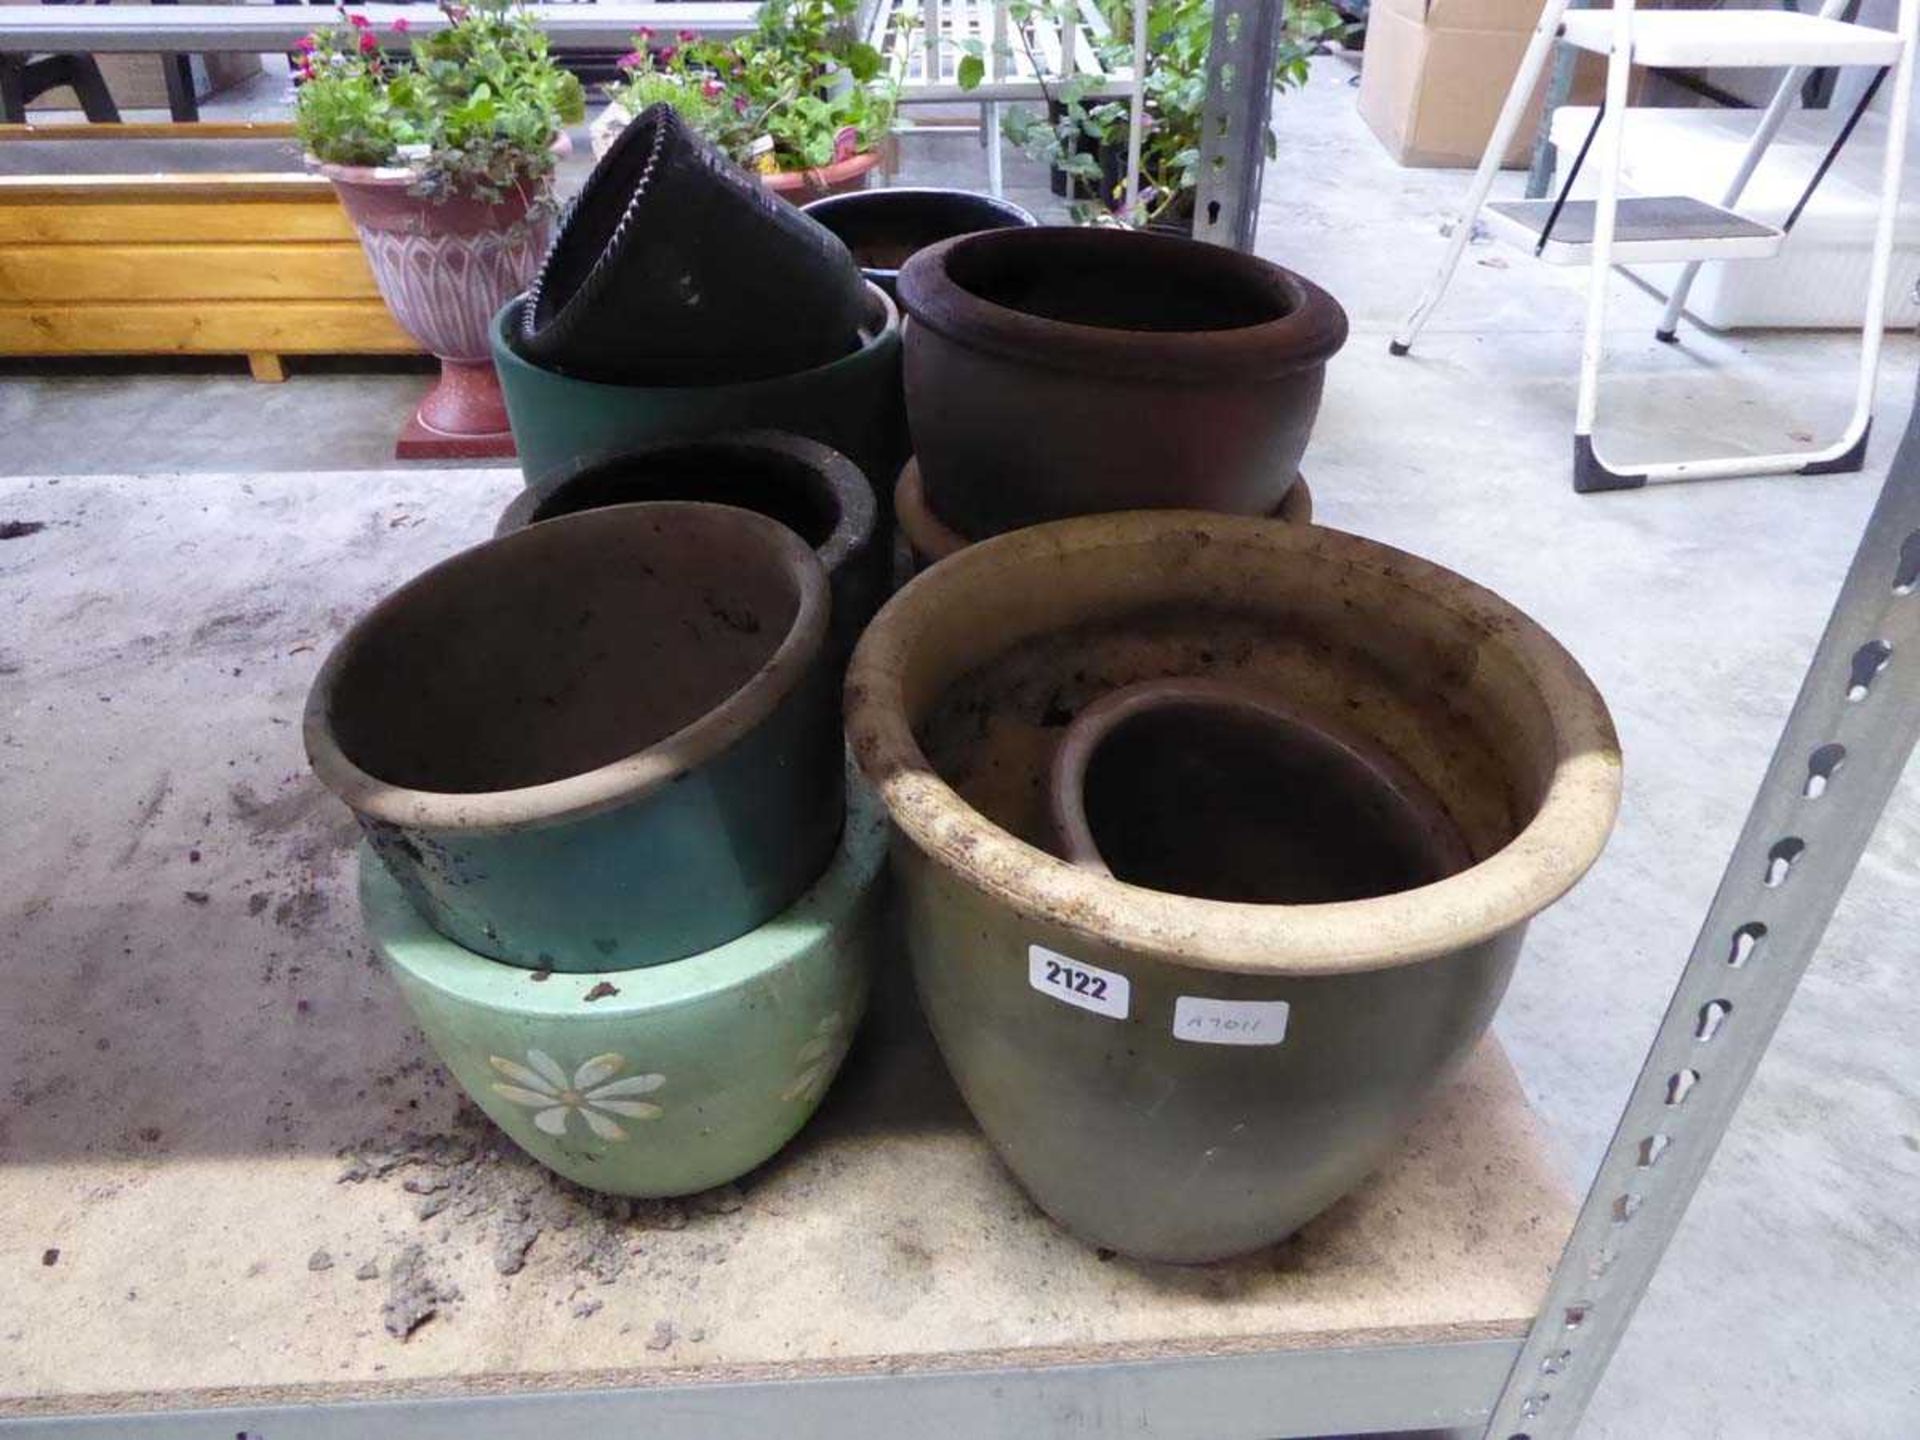 Quantity of various style garden pots